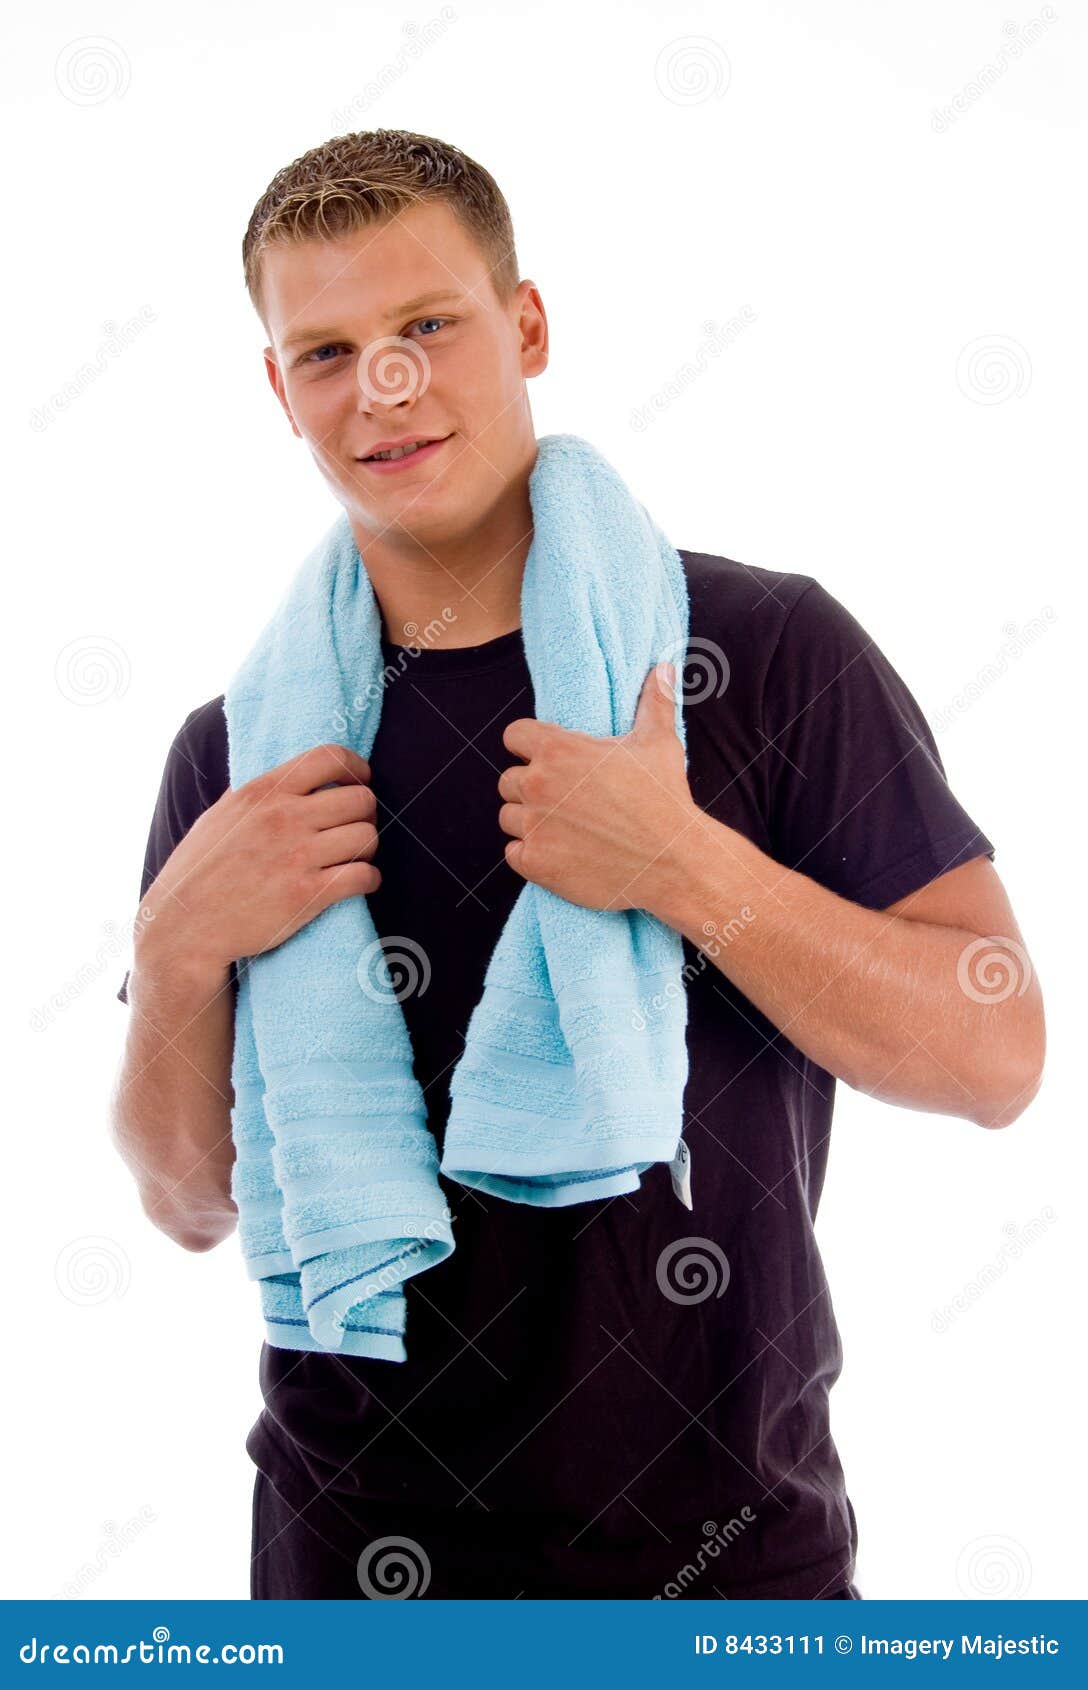 Полотенце на шею. Человек в полотенце. Человек держит полотенце. Полотенца для рук мужской. Мужчина с полотенцем в руках.